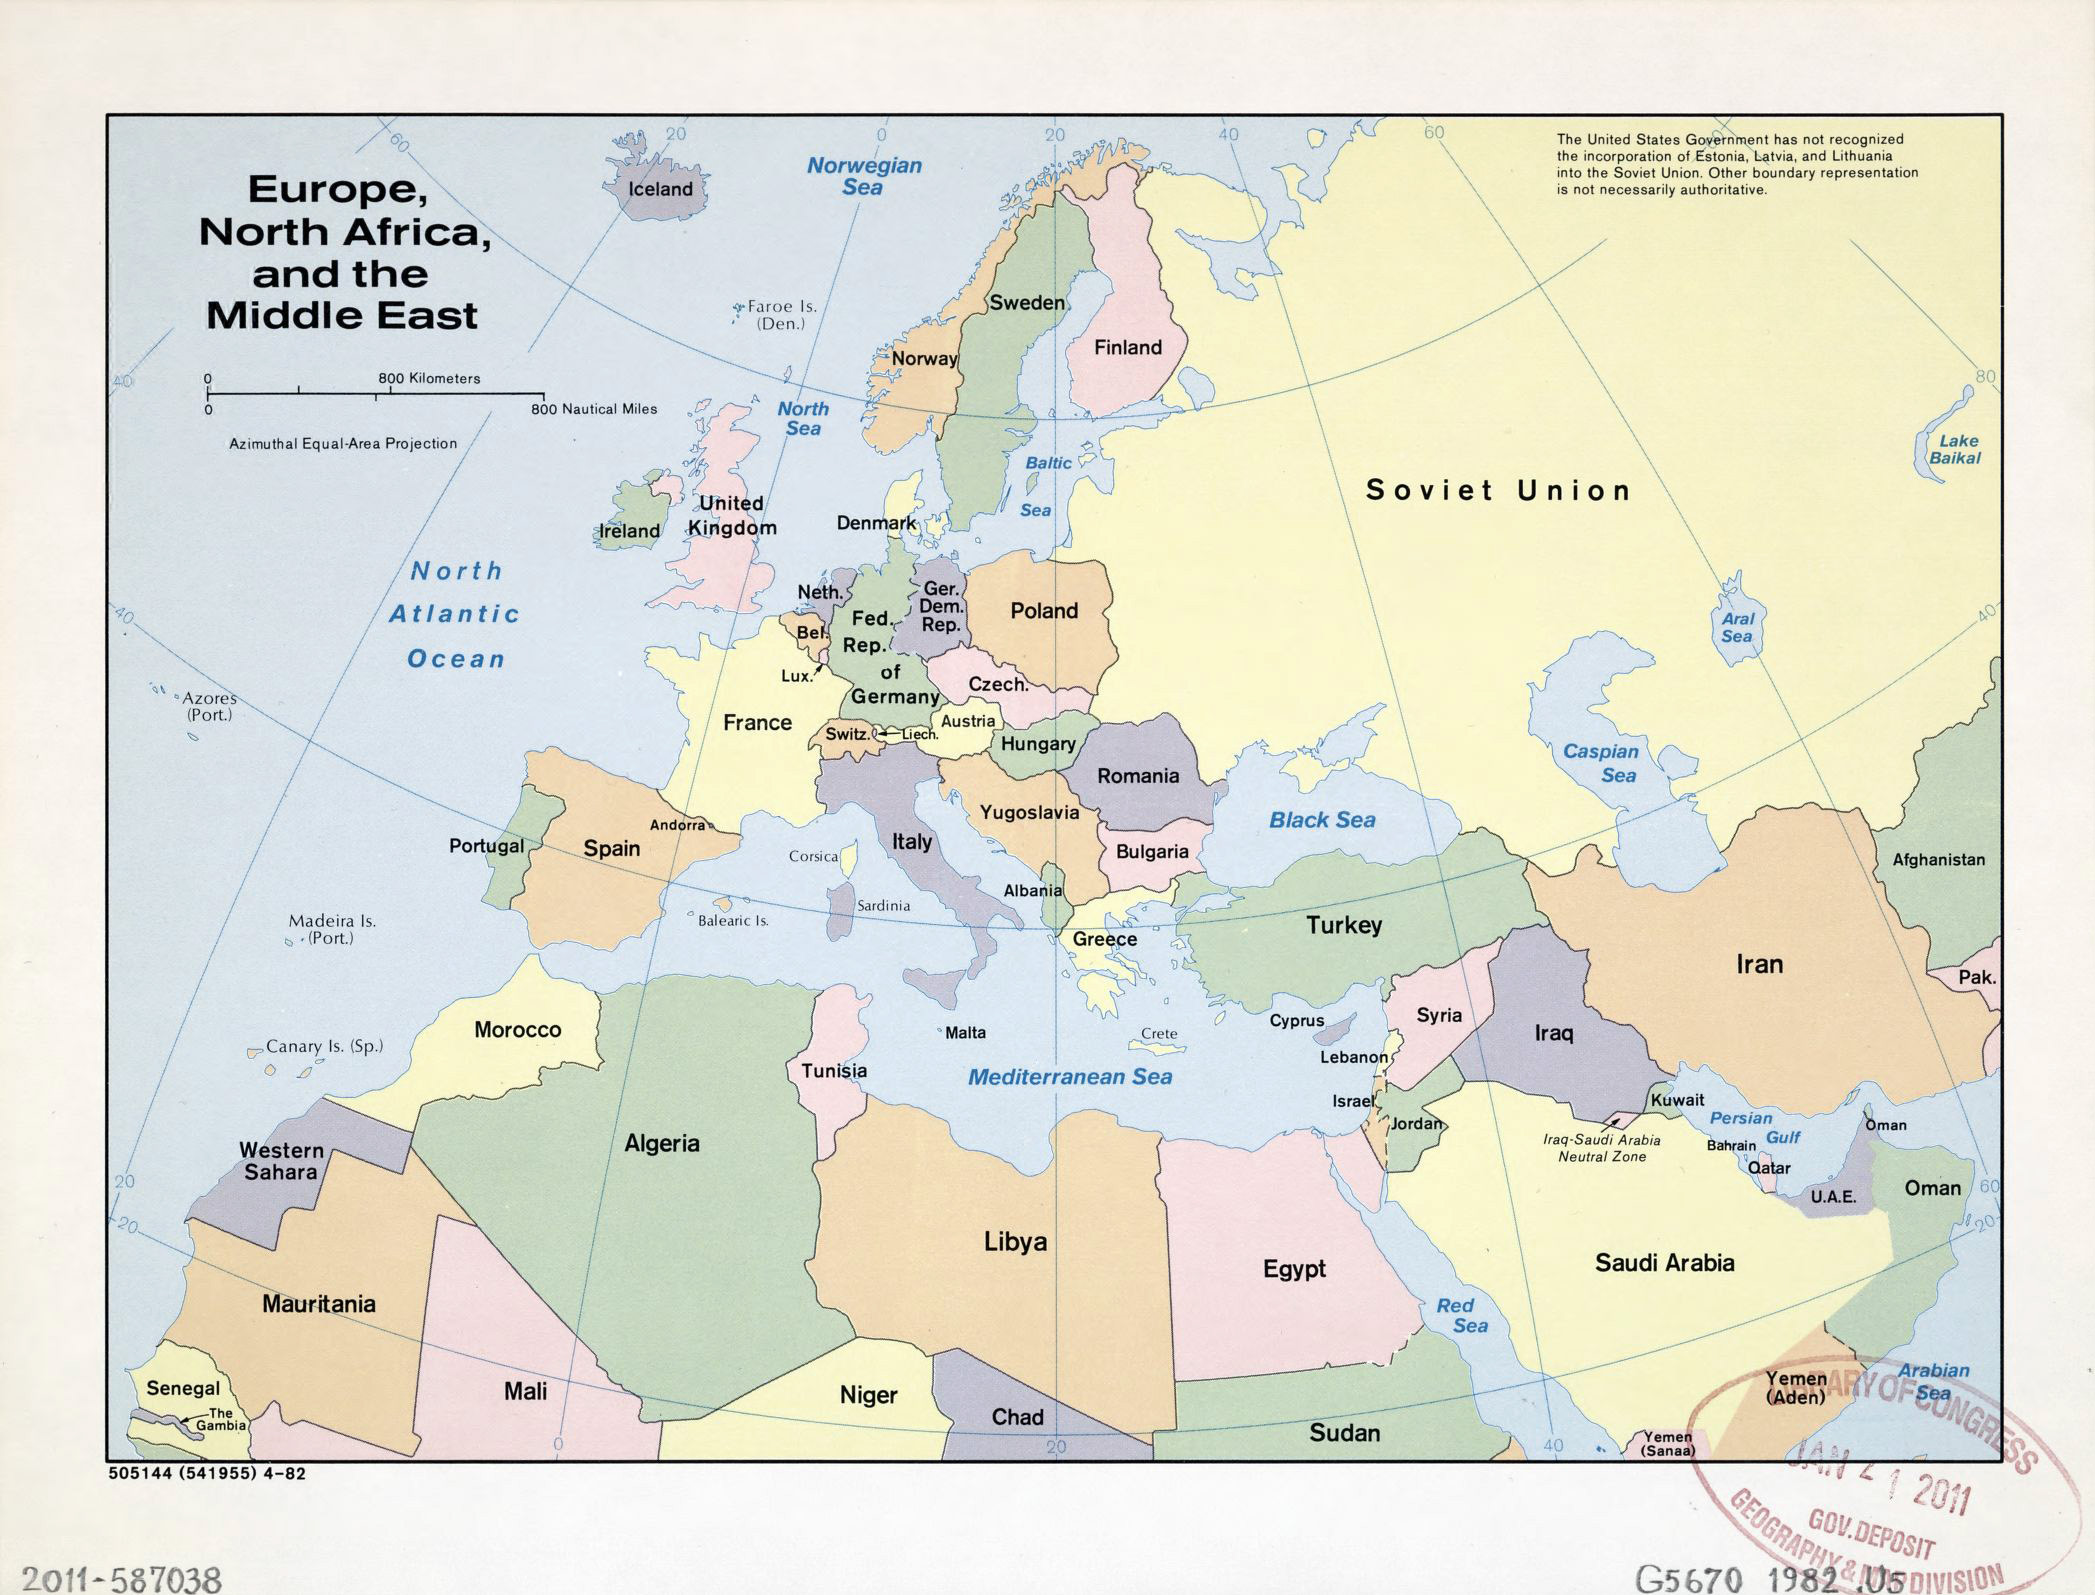 Mapa de Europa Grande, Mapa Europa Grande